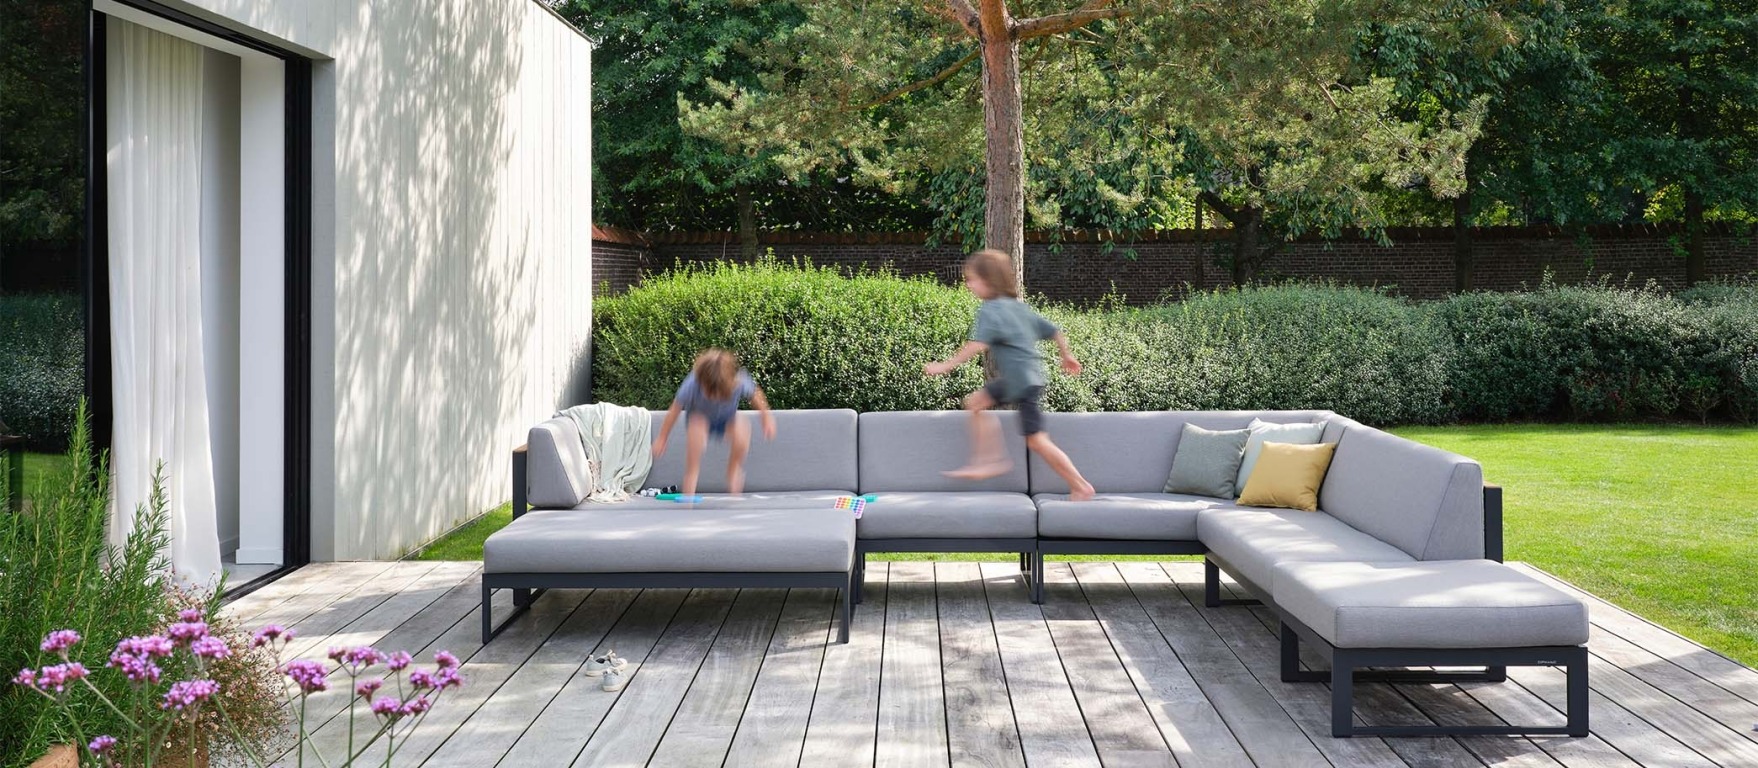 kids jumping in outdoor lounge set - Landscape Teak